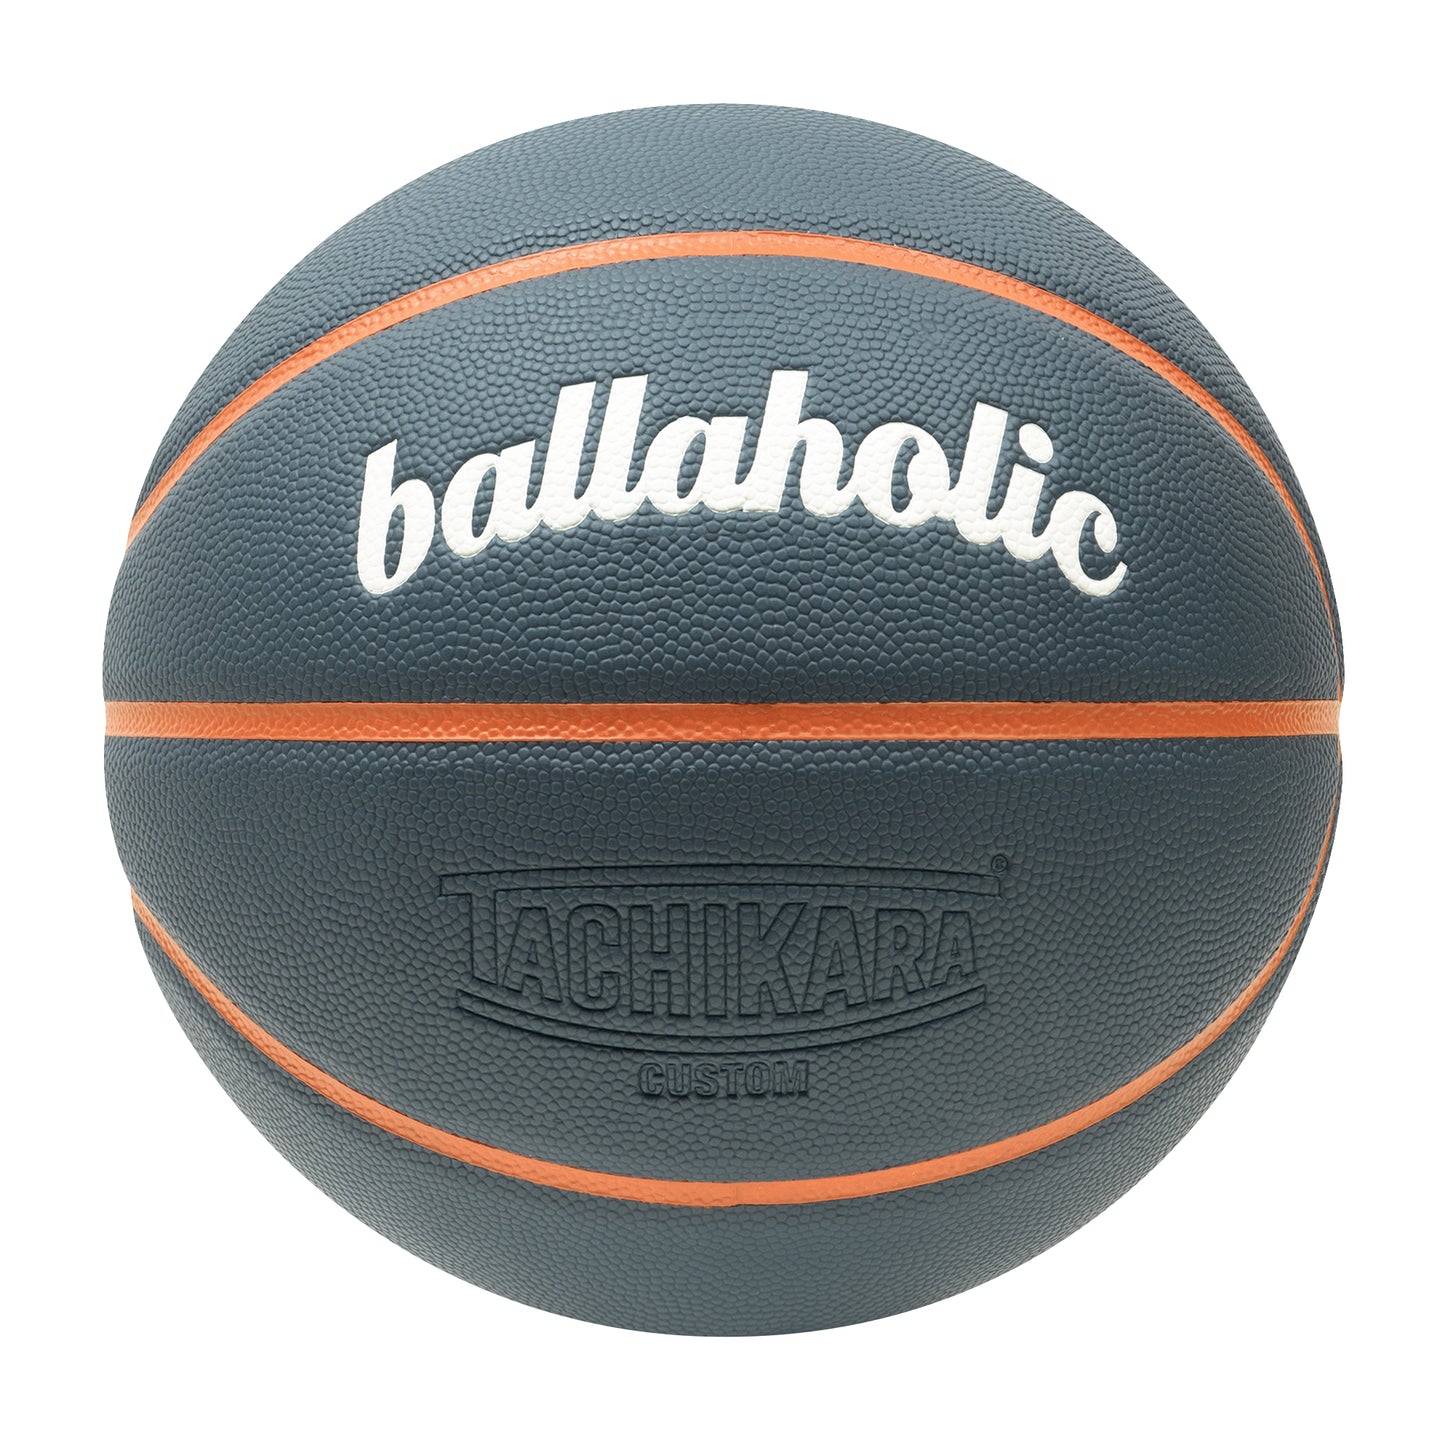 Playground Basketball / ballaholic x TACHIKARA (slate blue/orange) 7